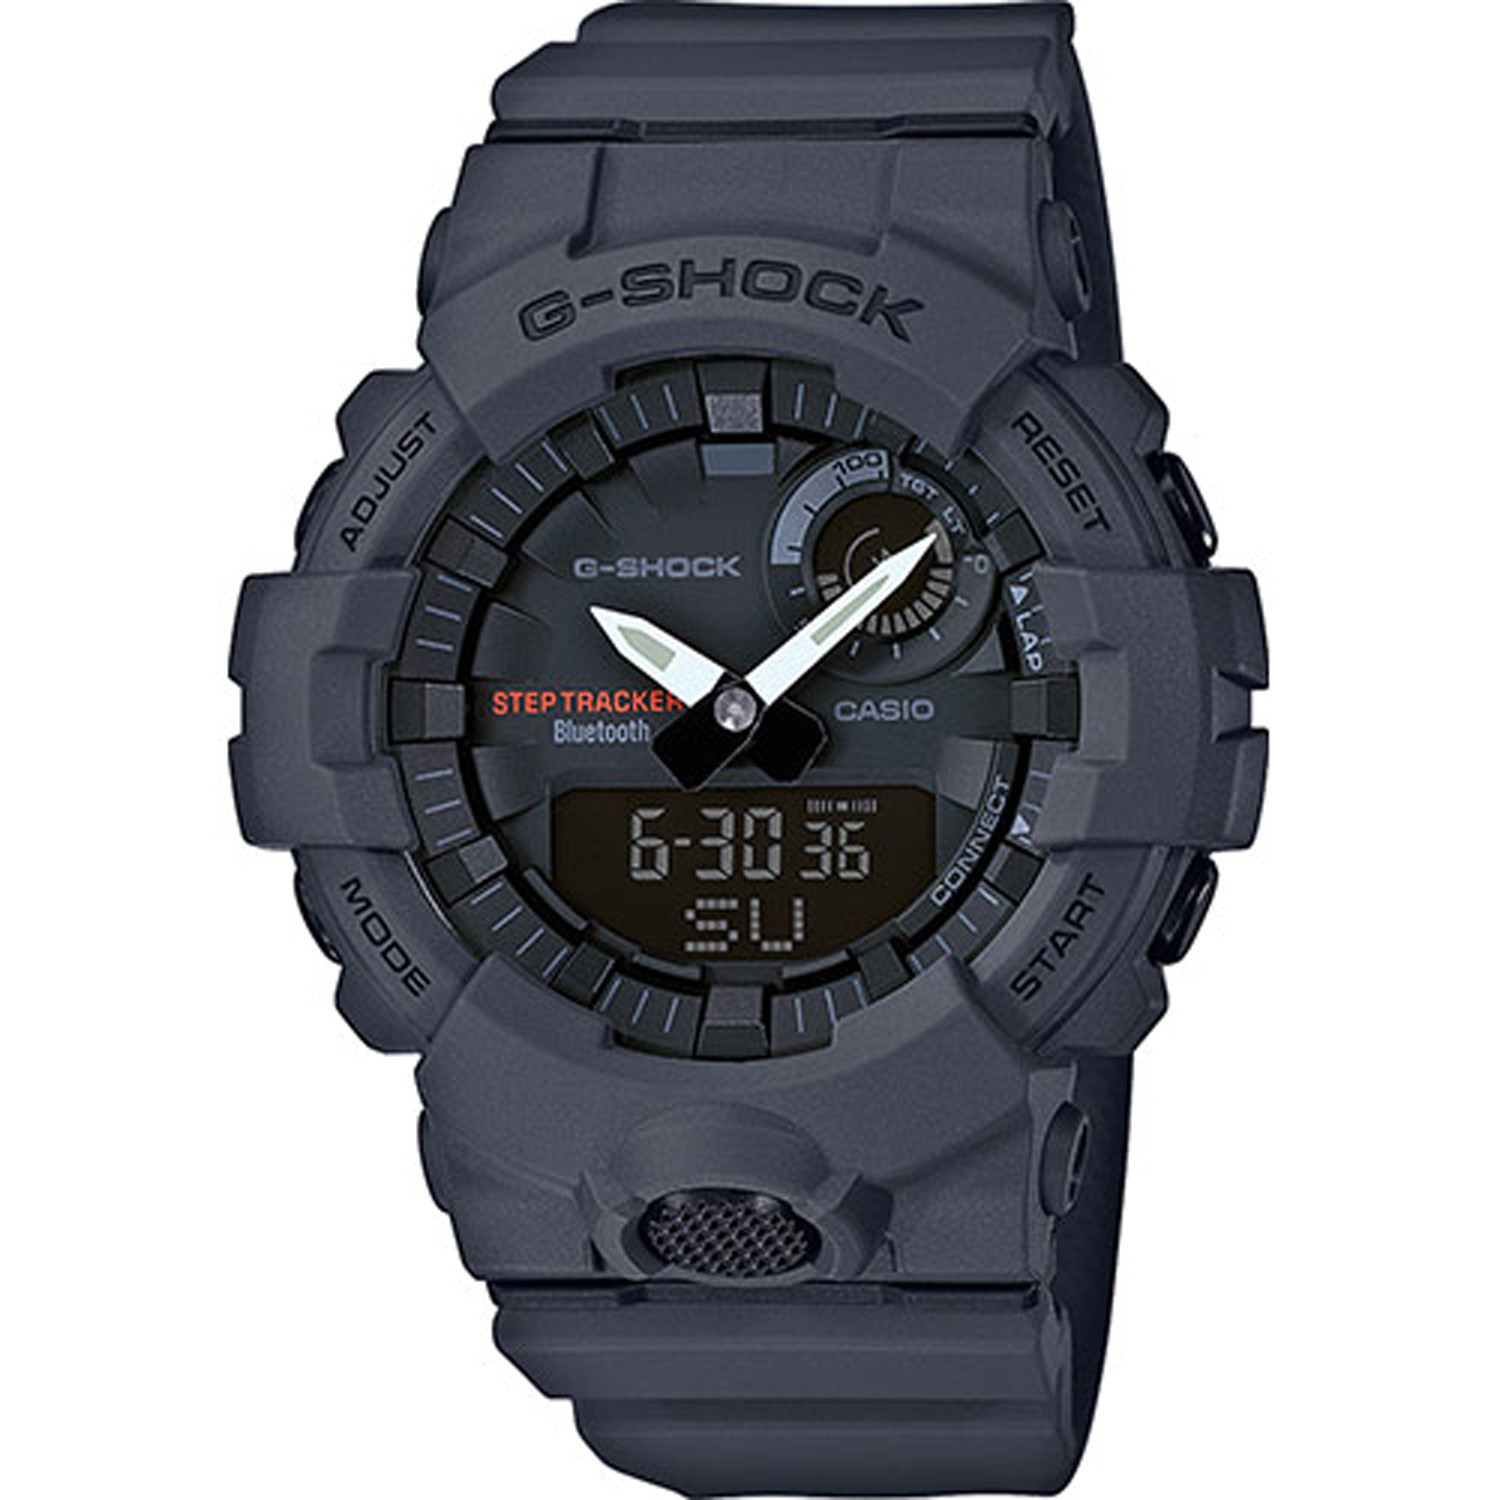 Montre Casio G-Shock grise
Bluetooth